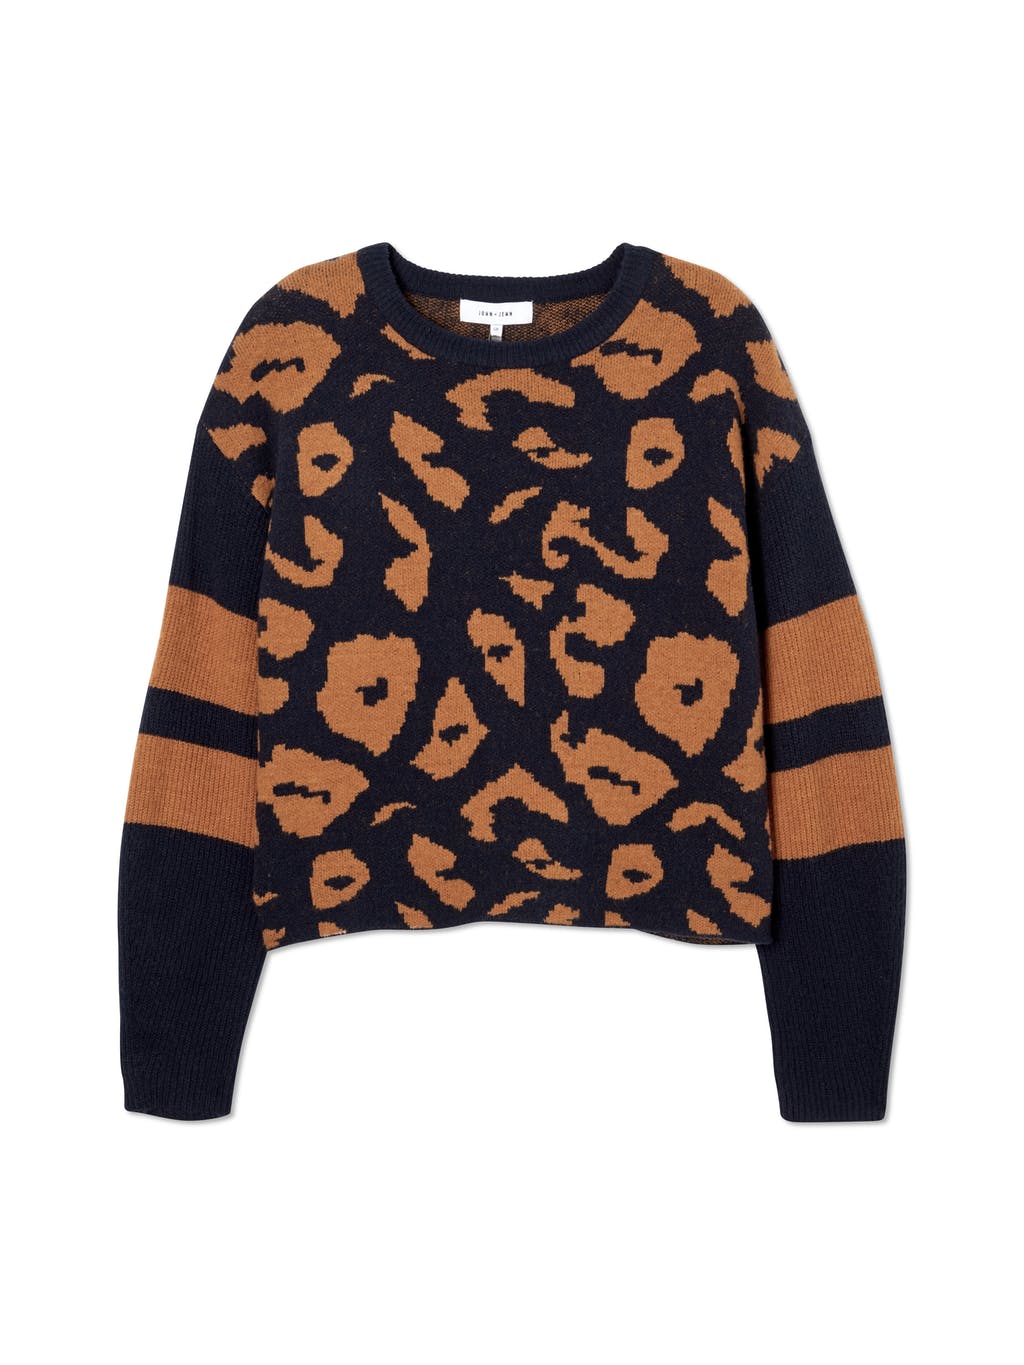 Finn Leopard Varsity Sweater